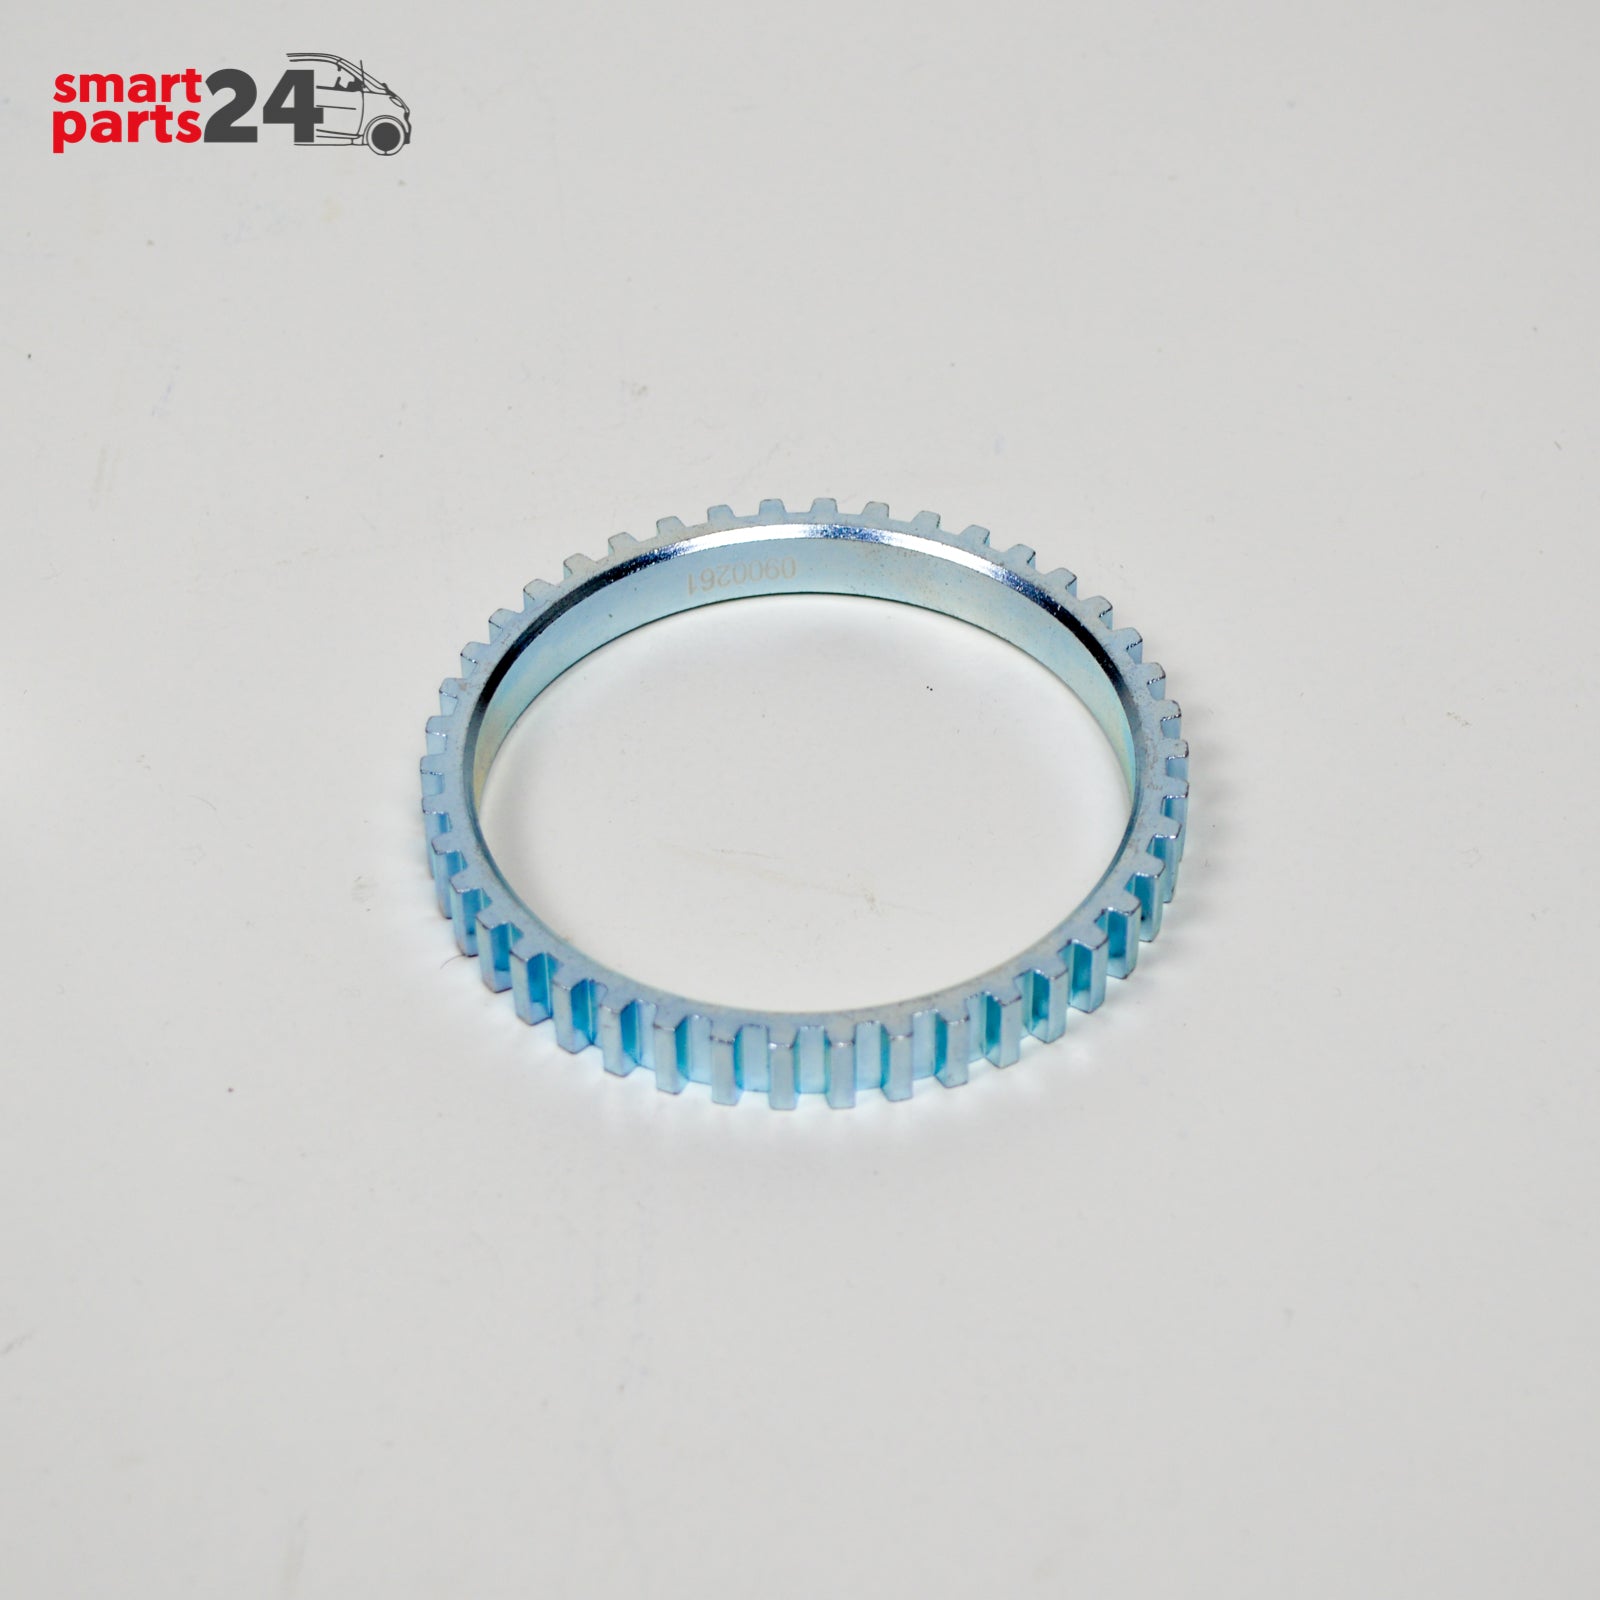 Smart Roadstar 452 sensor ring ABS ring